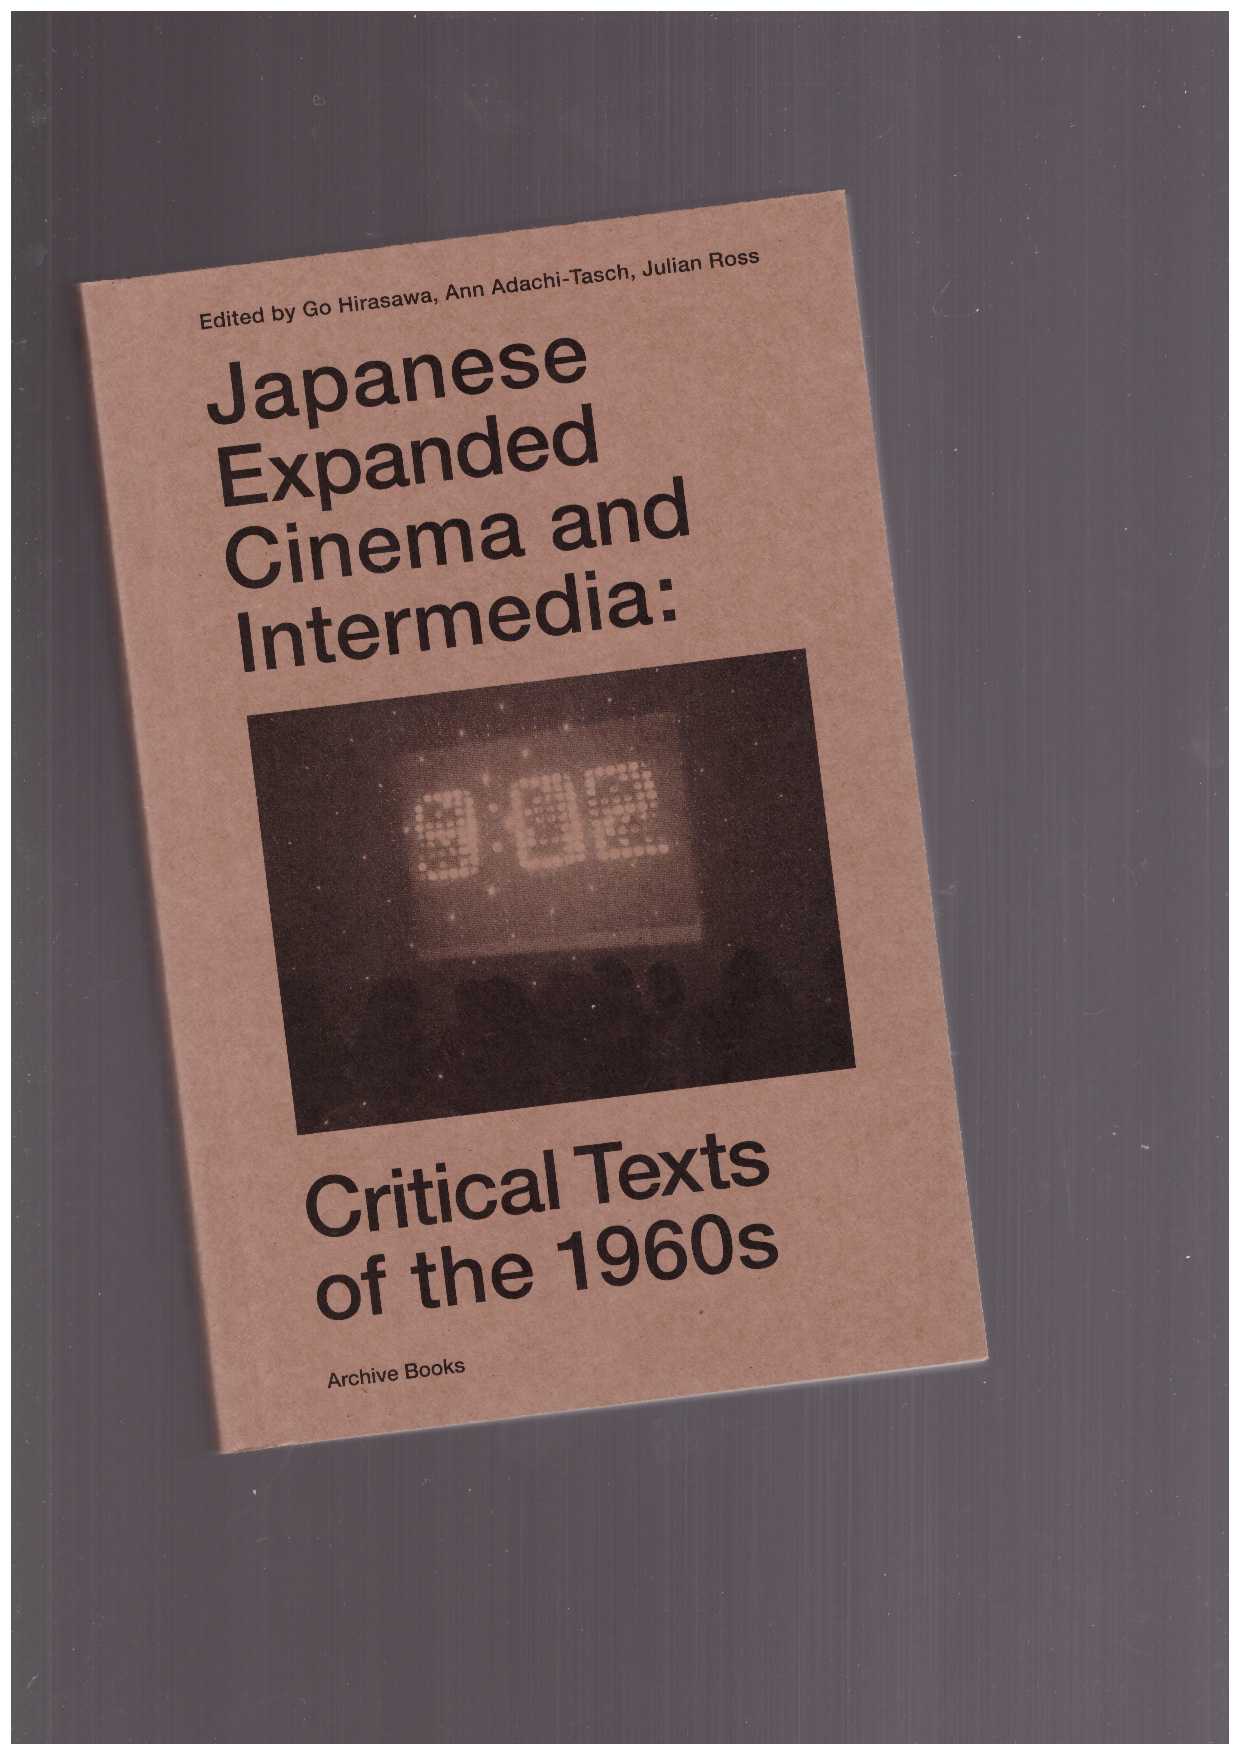 ADACHI-TASCH, Ann; HIRASAWA, Go; ROSS, Julian (eds.) - Japanese Expanded Cinema and Intermedia. Critical Texts of the 1960s